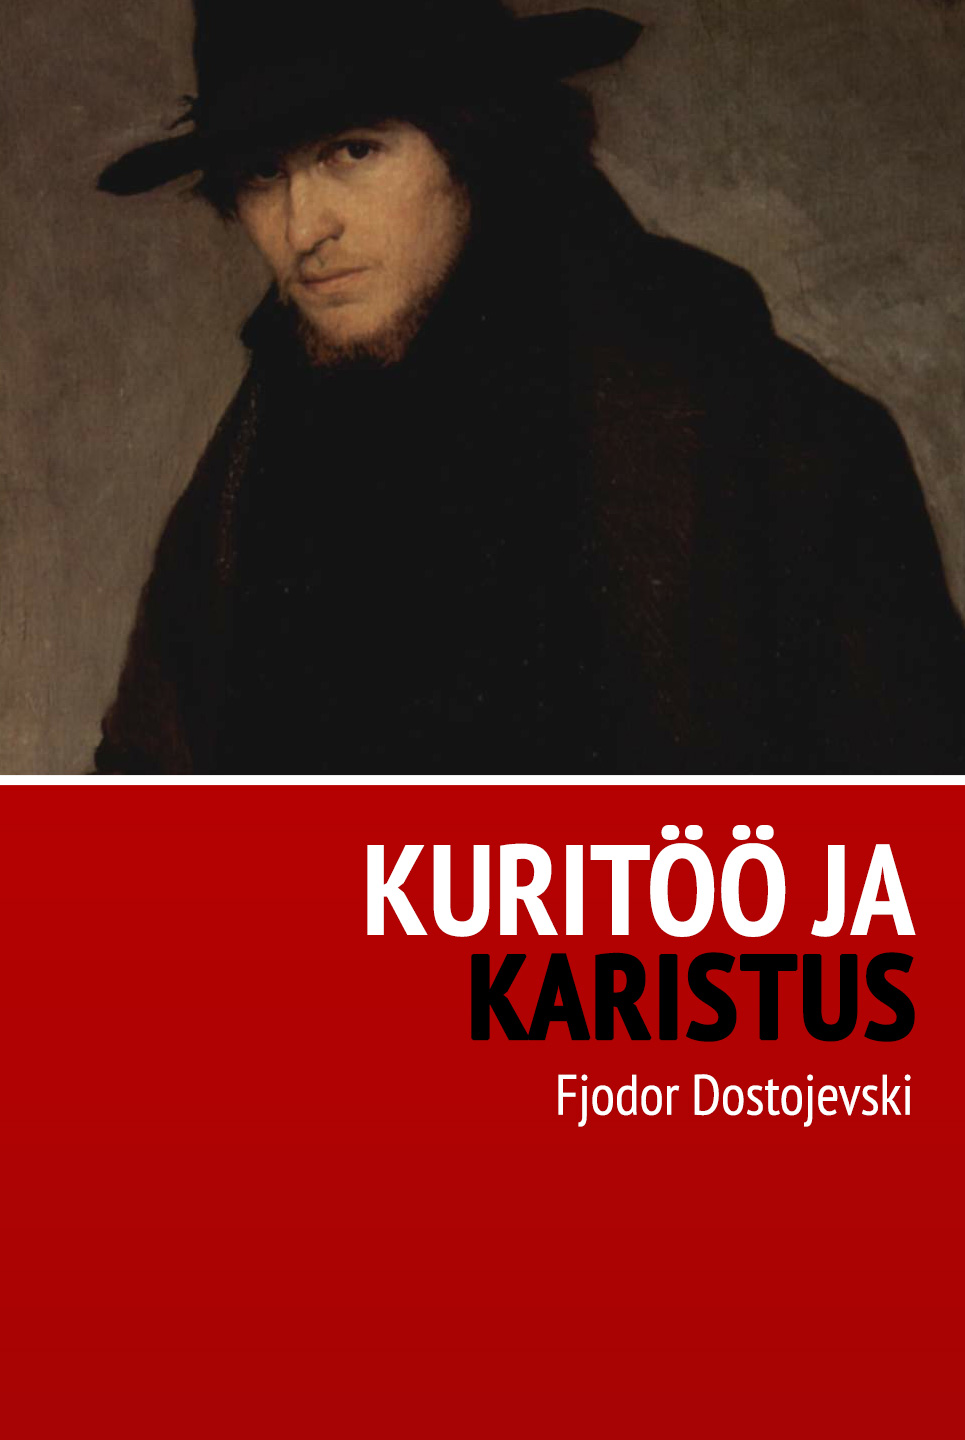 Fyodor Dostoevsky, A. H. Tammsaare: Kuritöö ja karistus (EBook, Estonian language, Readme)